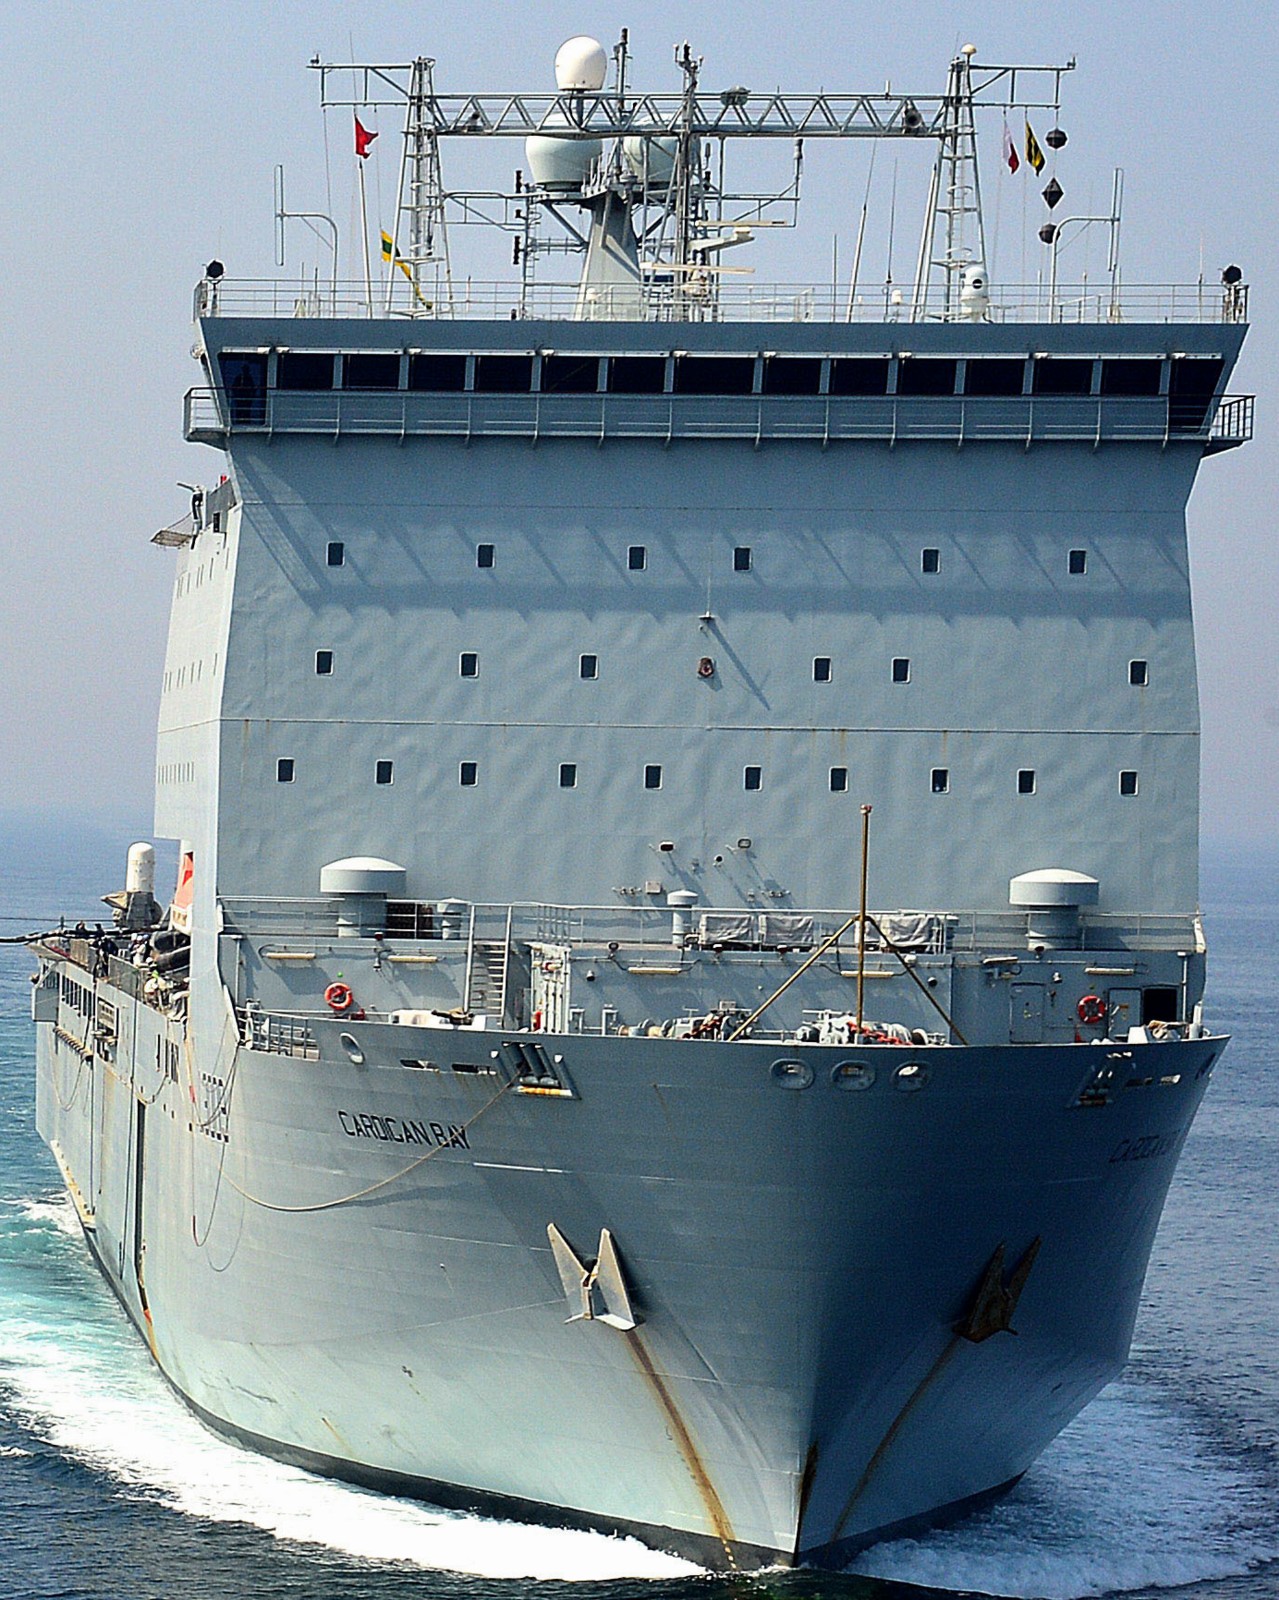 l-3009 rfa cardigan bay dock landing ship lsd royal fleet auxilary navy 29